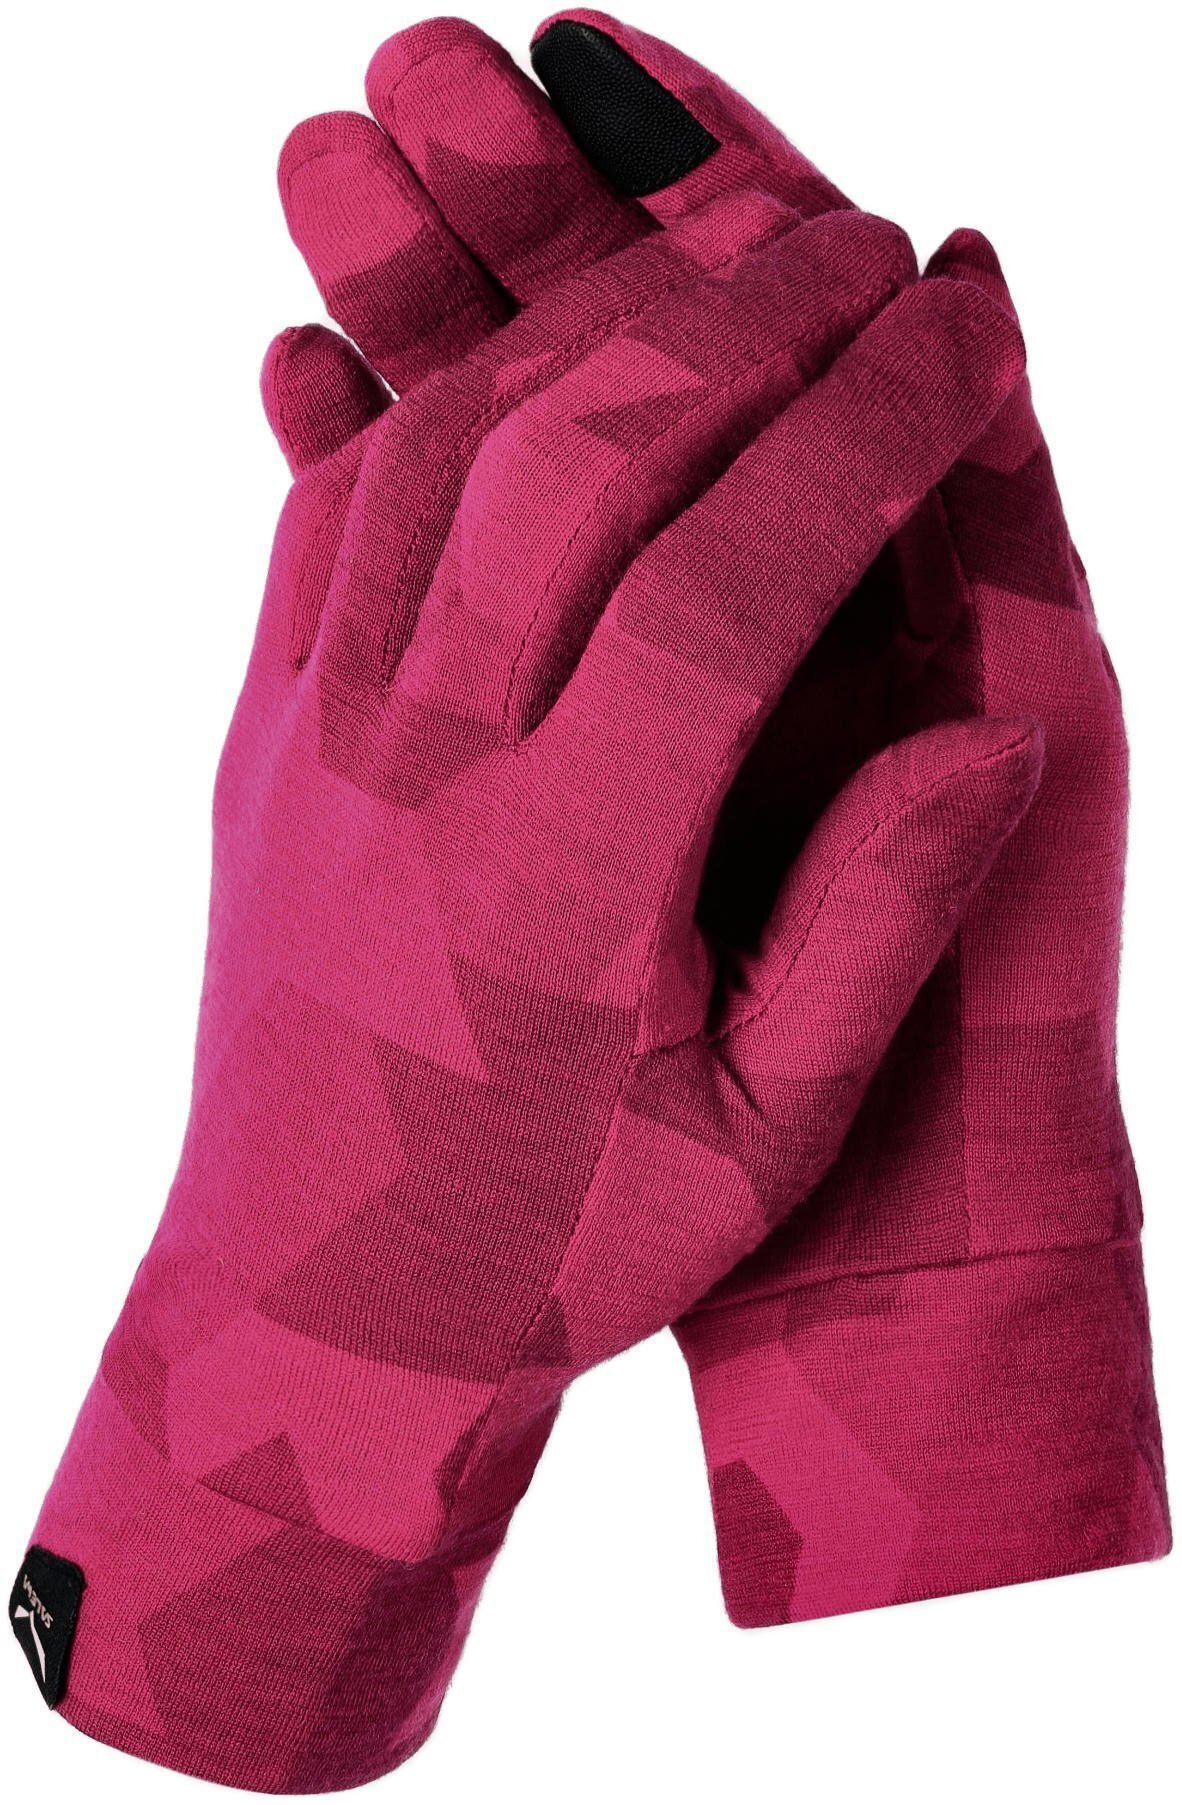 Перчатки женские Salewa Cristallo W Gloves 28514 6319 5/XS розовый фото 2